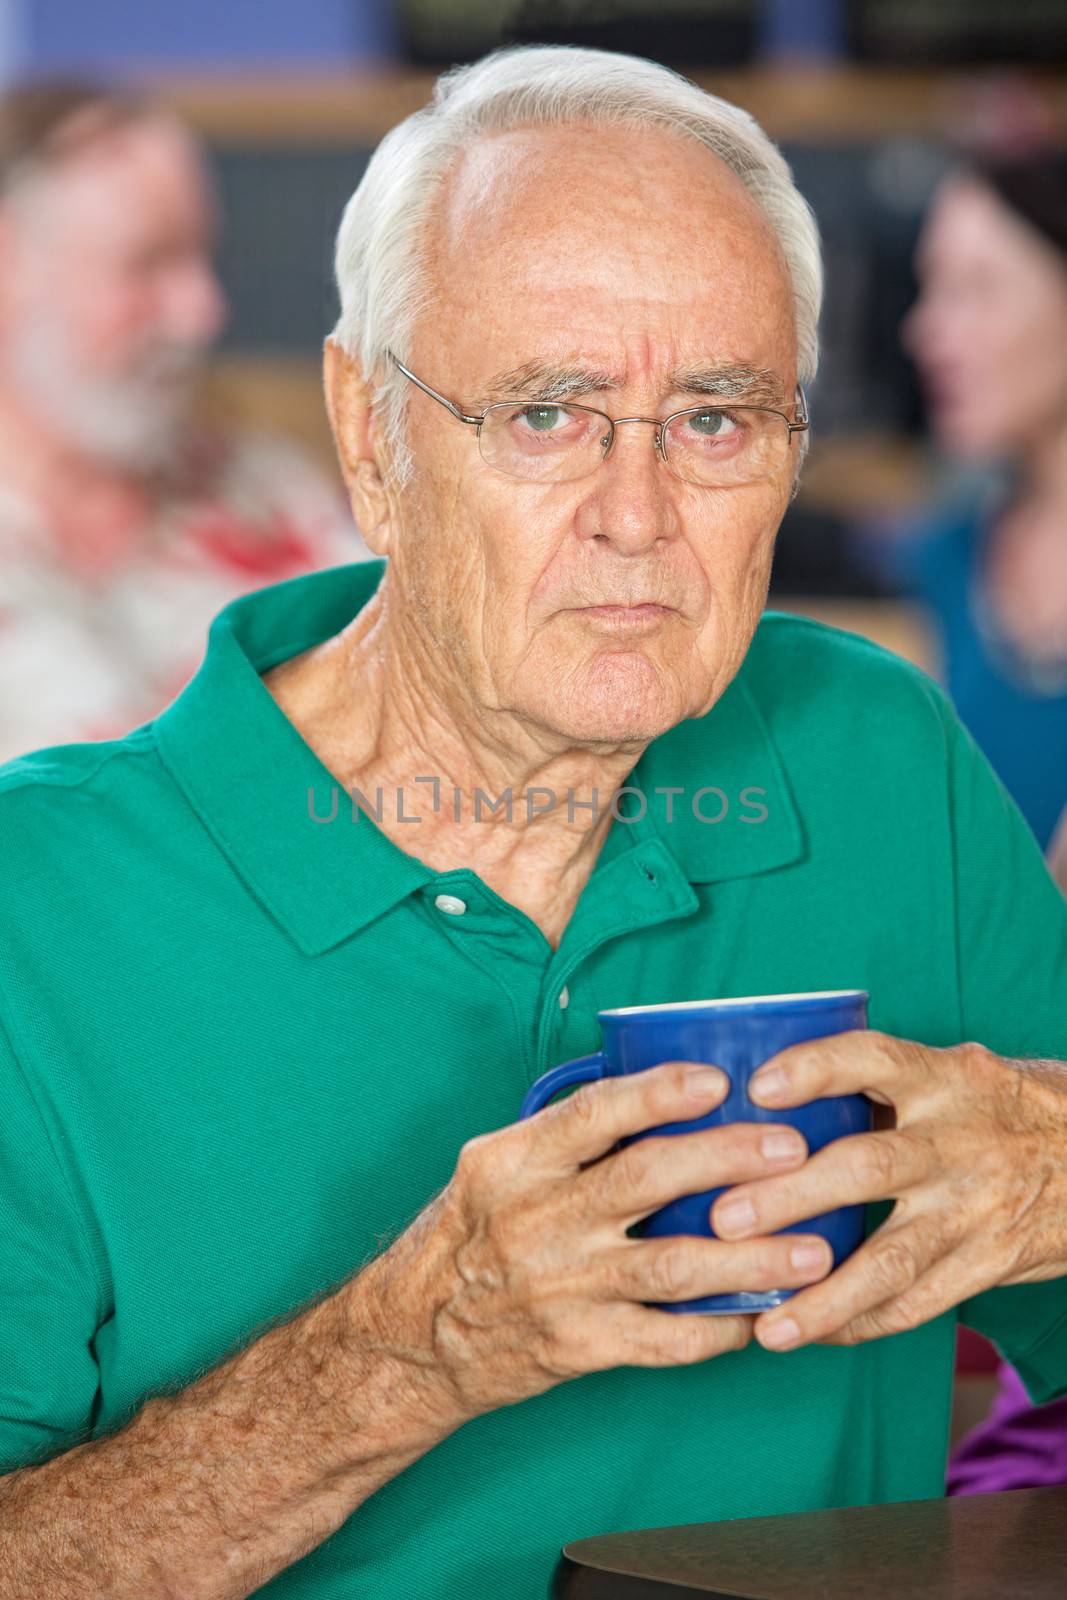 Sulky senior male holding coffee mug in cafe